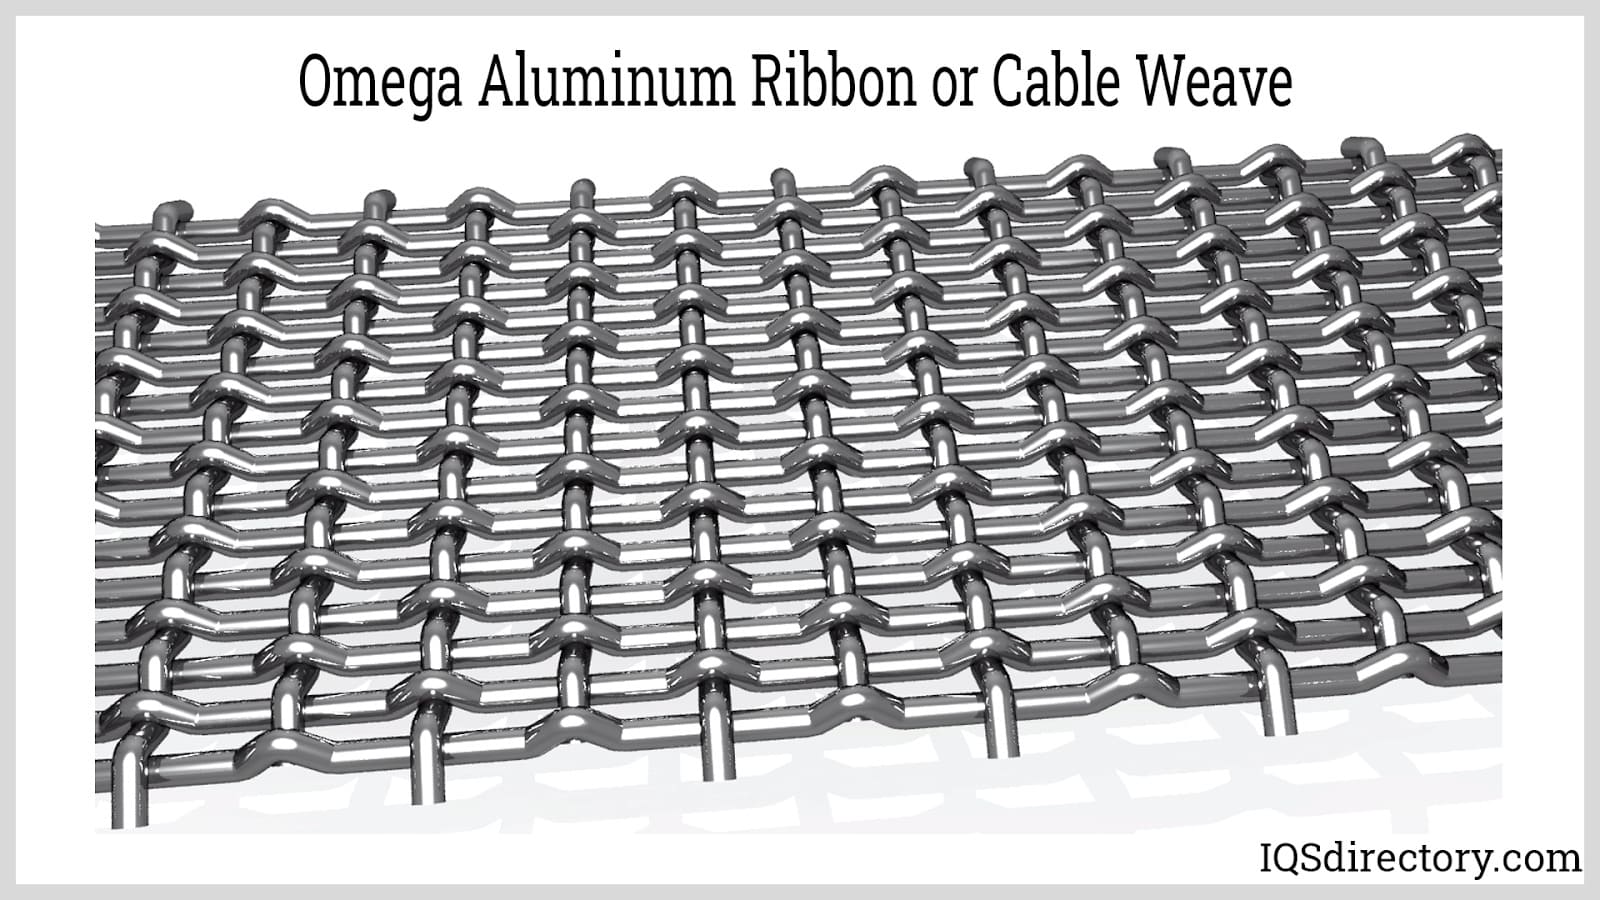 Omega Aluminum Ribbon or Cable Weave